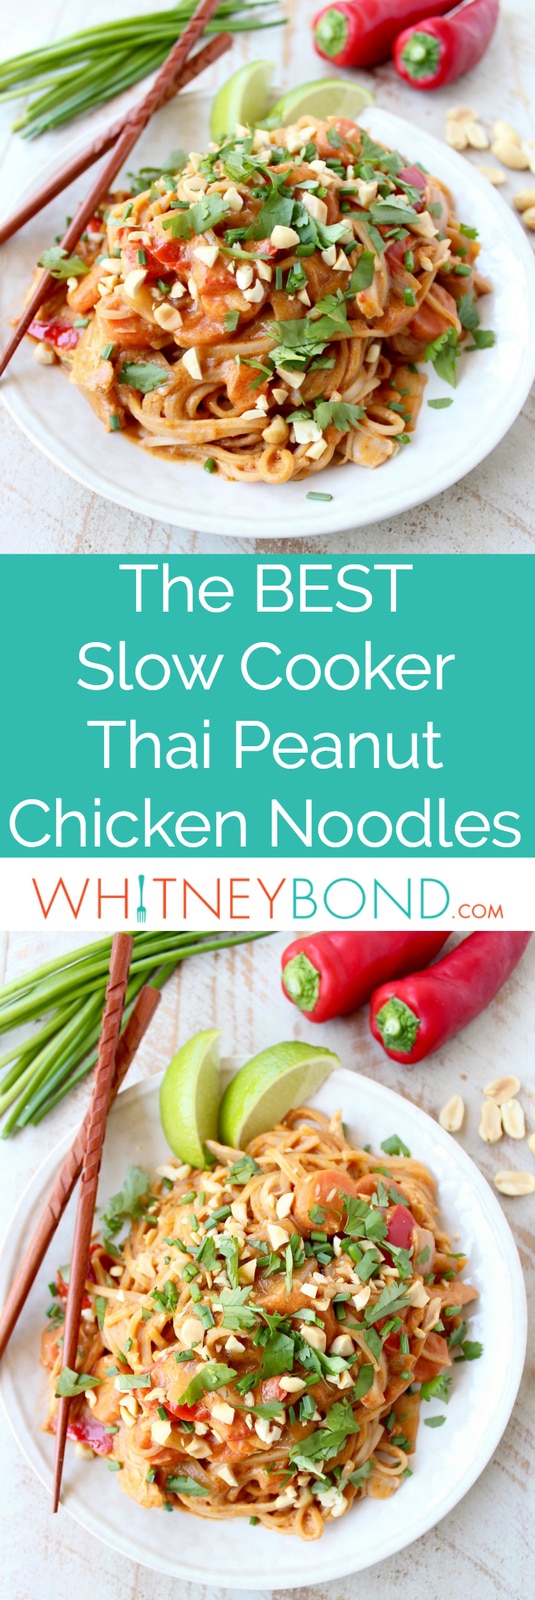 slow-cooker-thai-peanut-chicken-noodles-pinterest